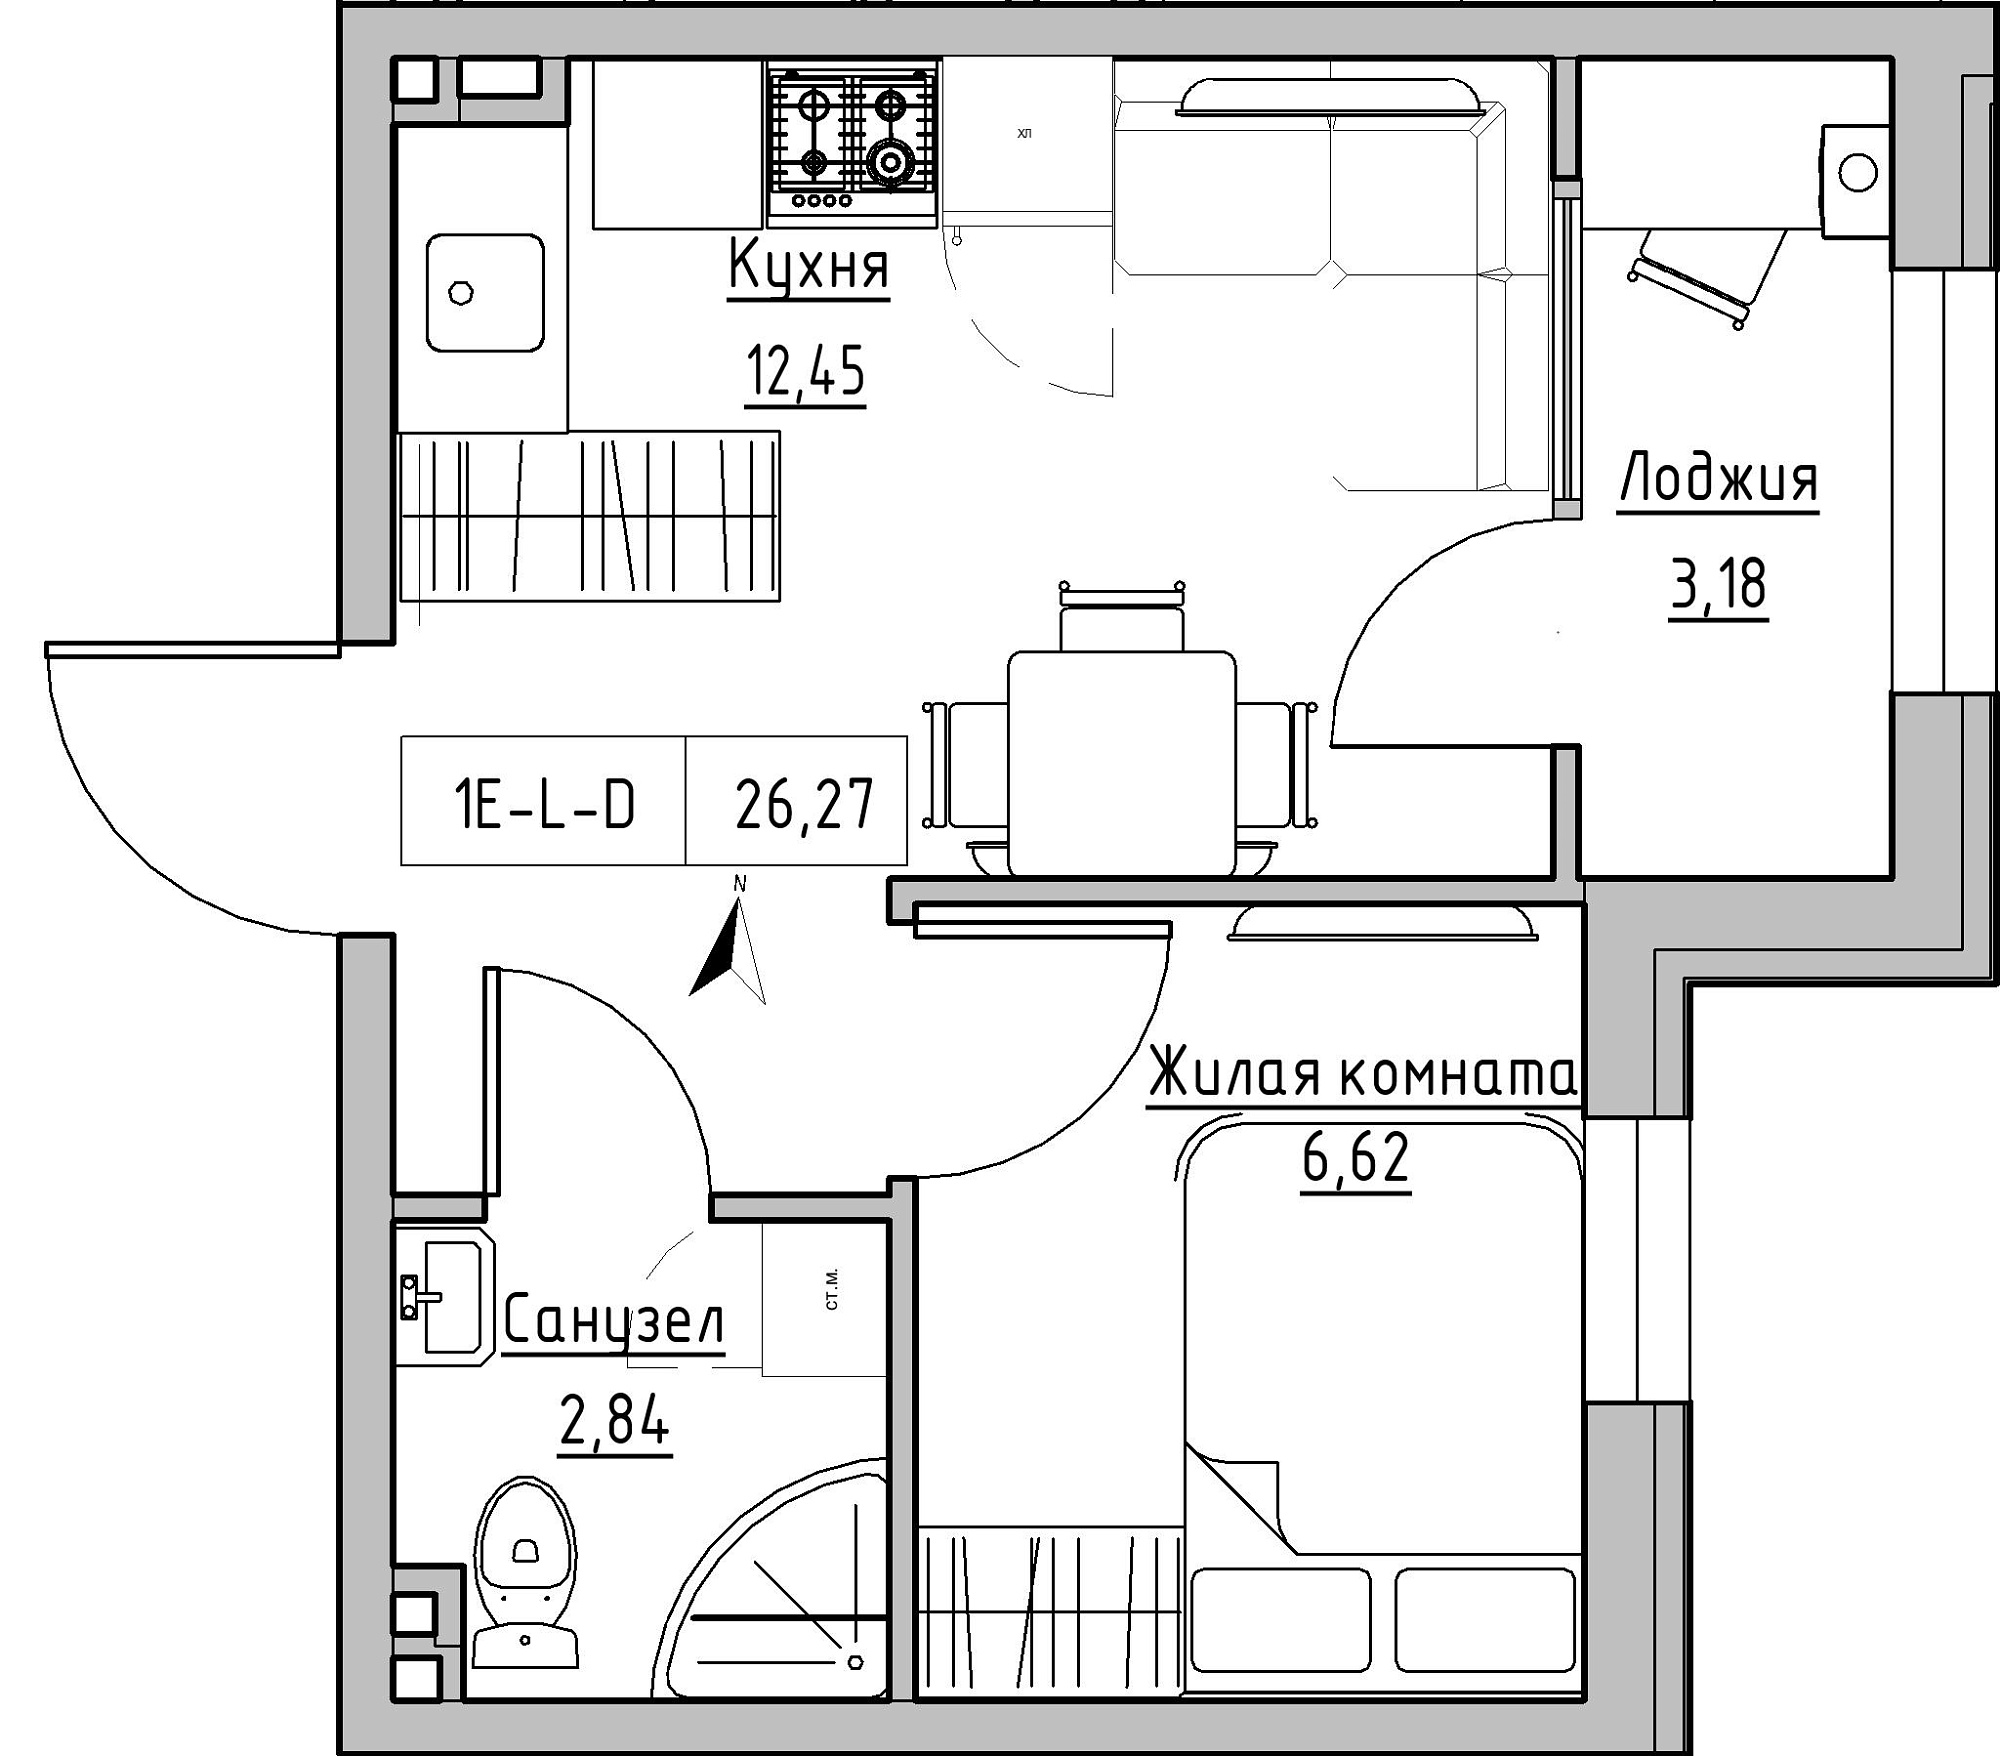 Planning 1-rm flats area 26.27m2, KS-024-01/0015.